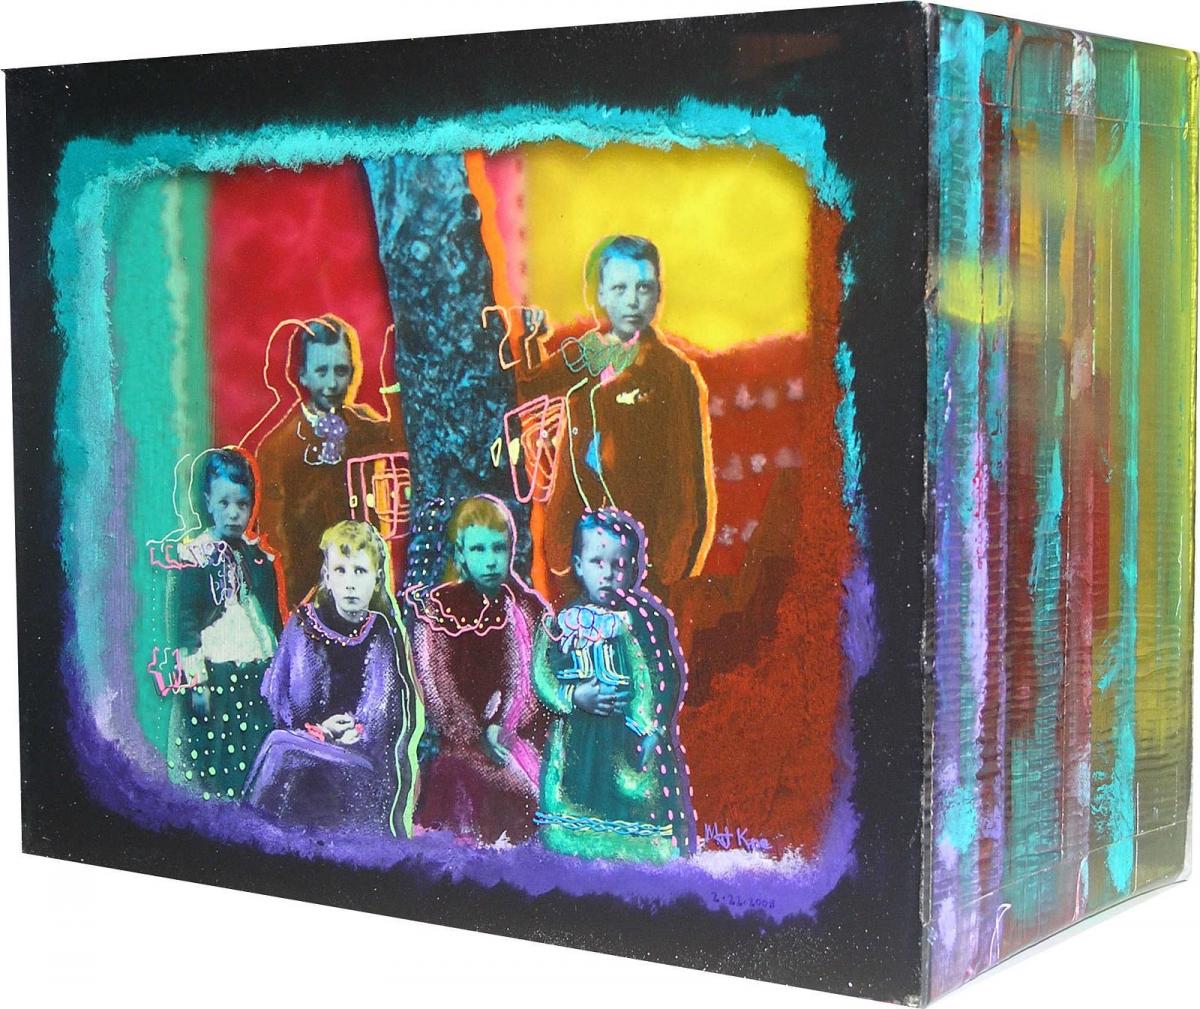 resin box by Matt Kane - “Where I dream to lie in Circumstance” - detail 1